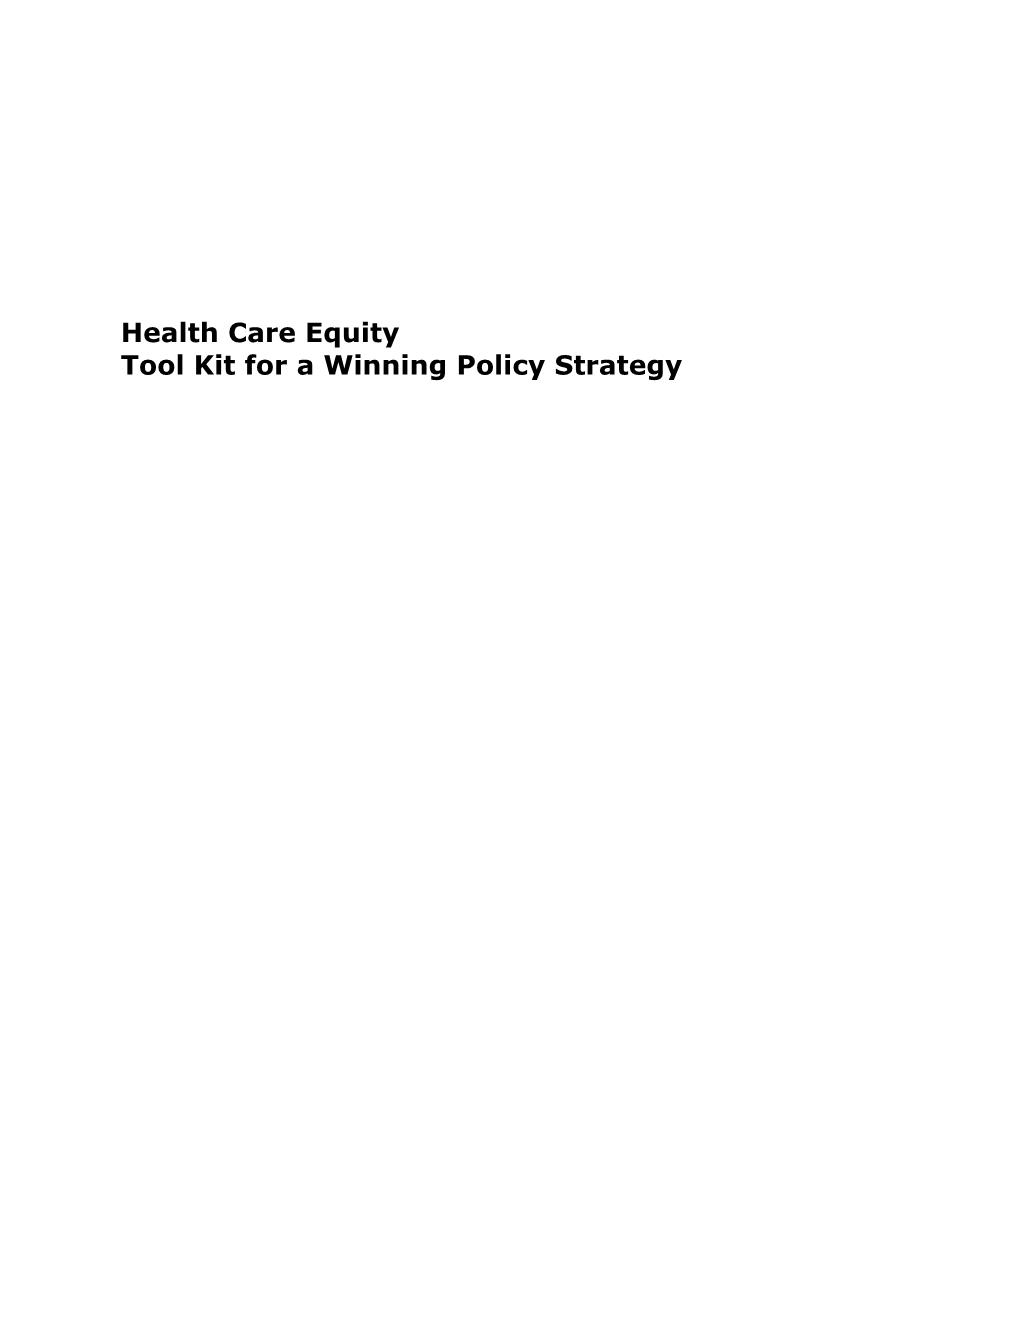 Tool Kit: Health Care Equity Power Analysis